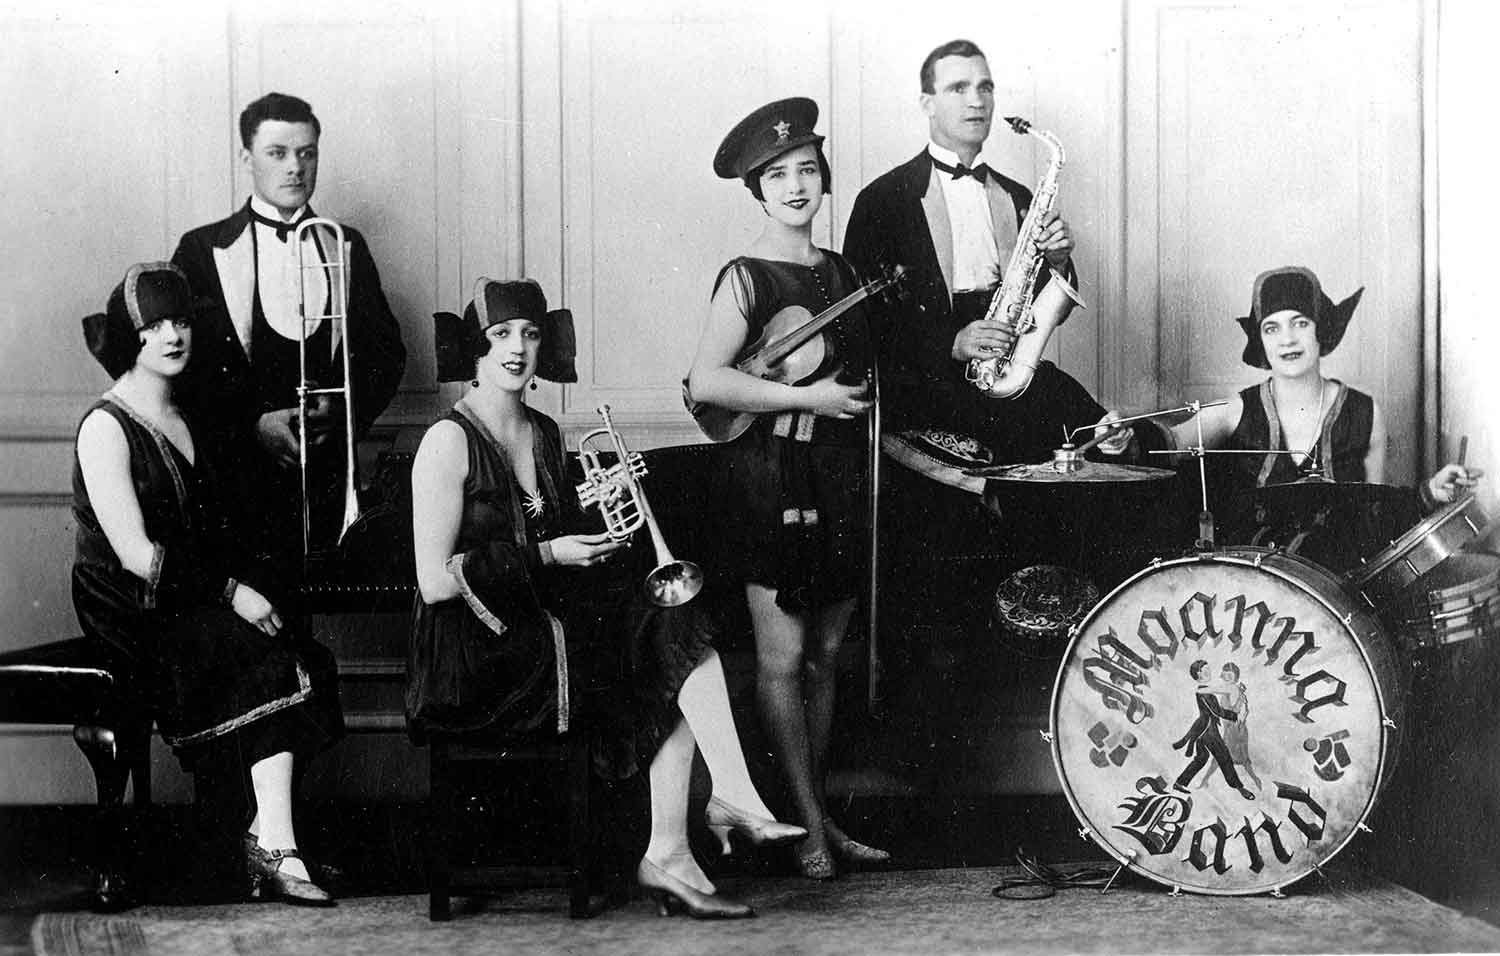 A Roaring 20s era jazz band